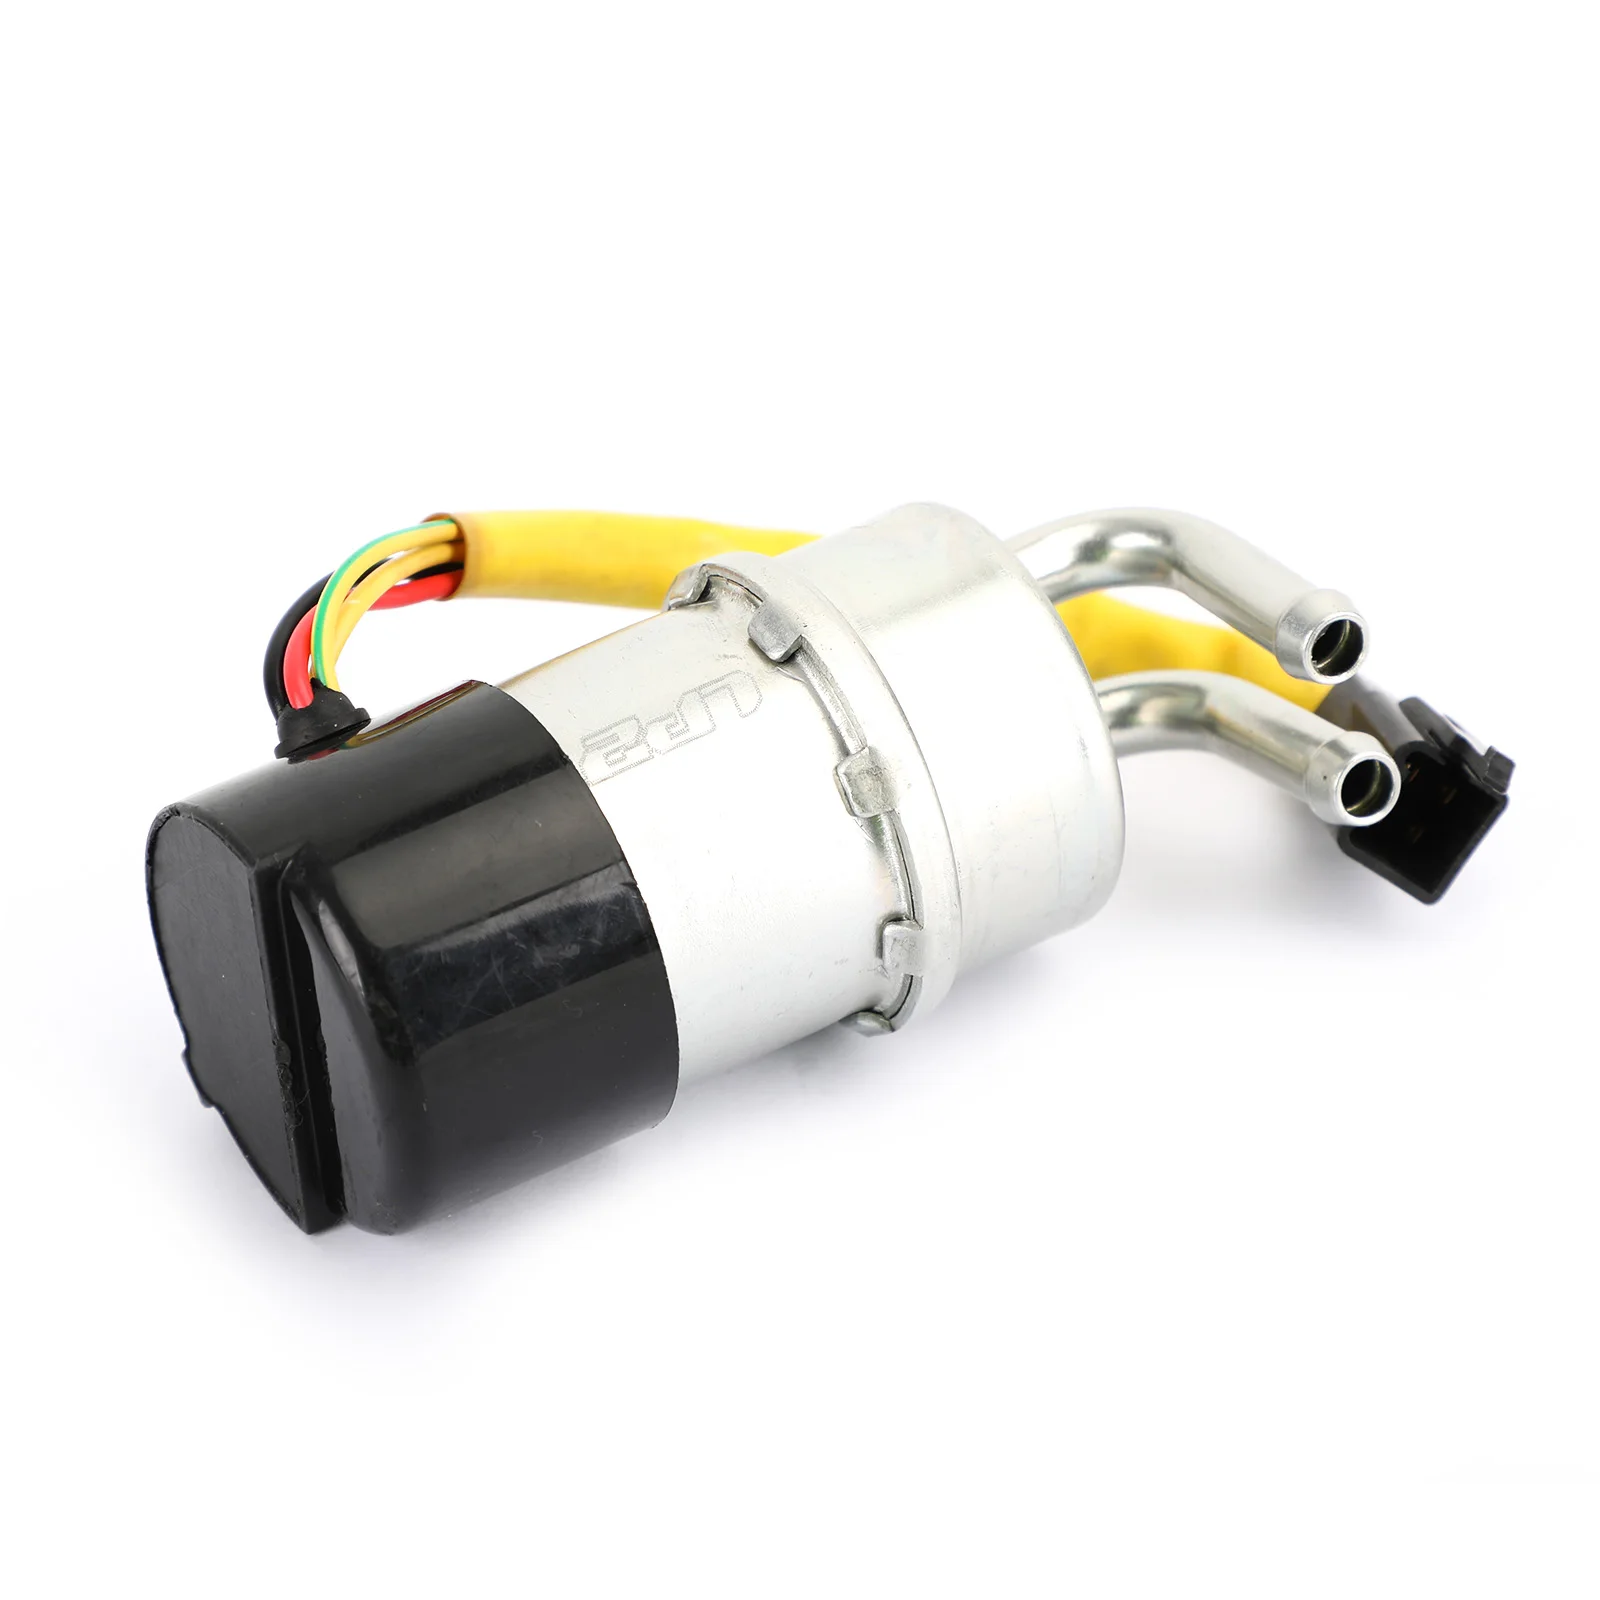 Artudatech for Suzuki Intruder VS 700 750 800 Fuel Pump Assembly  VS800 Boulevard S50  # 15100-38A10 (4 wire plug)